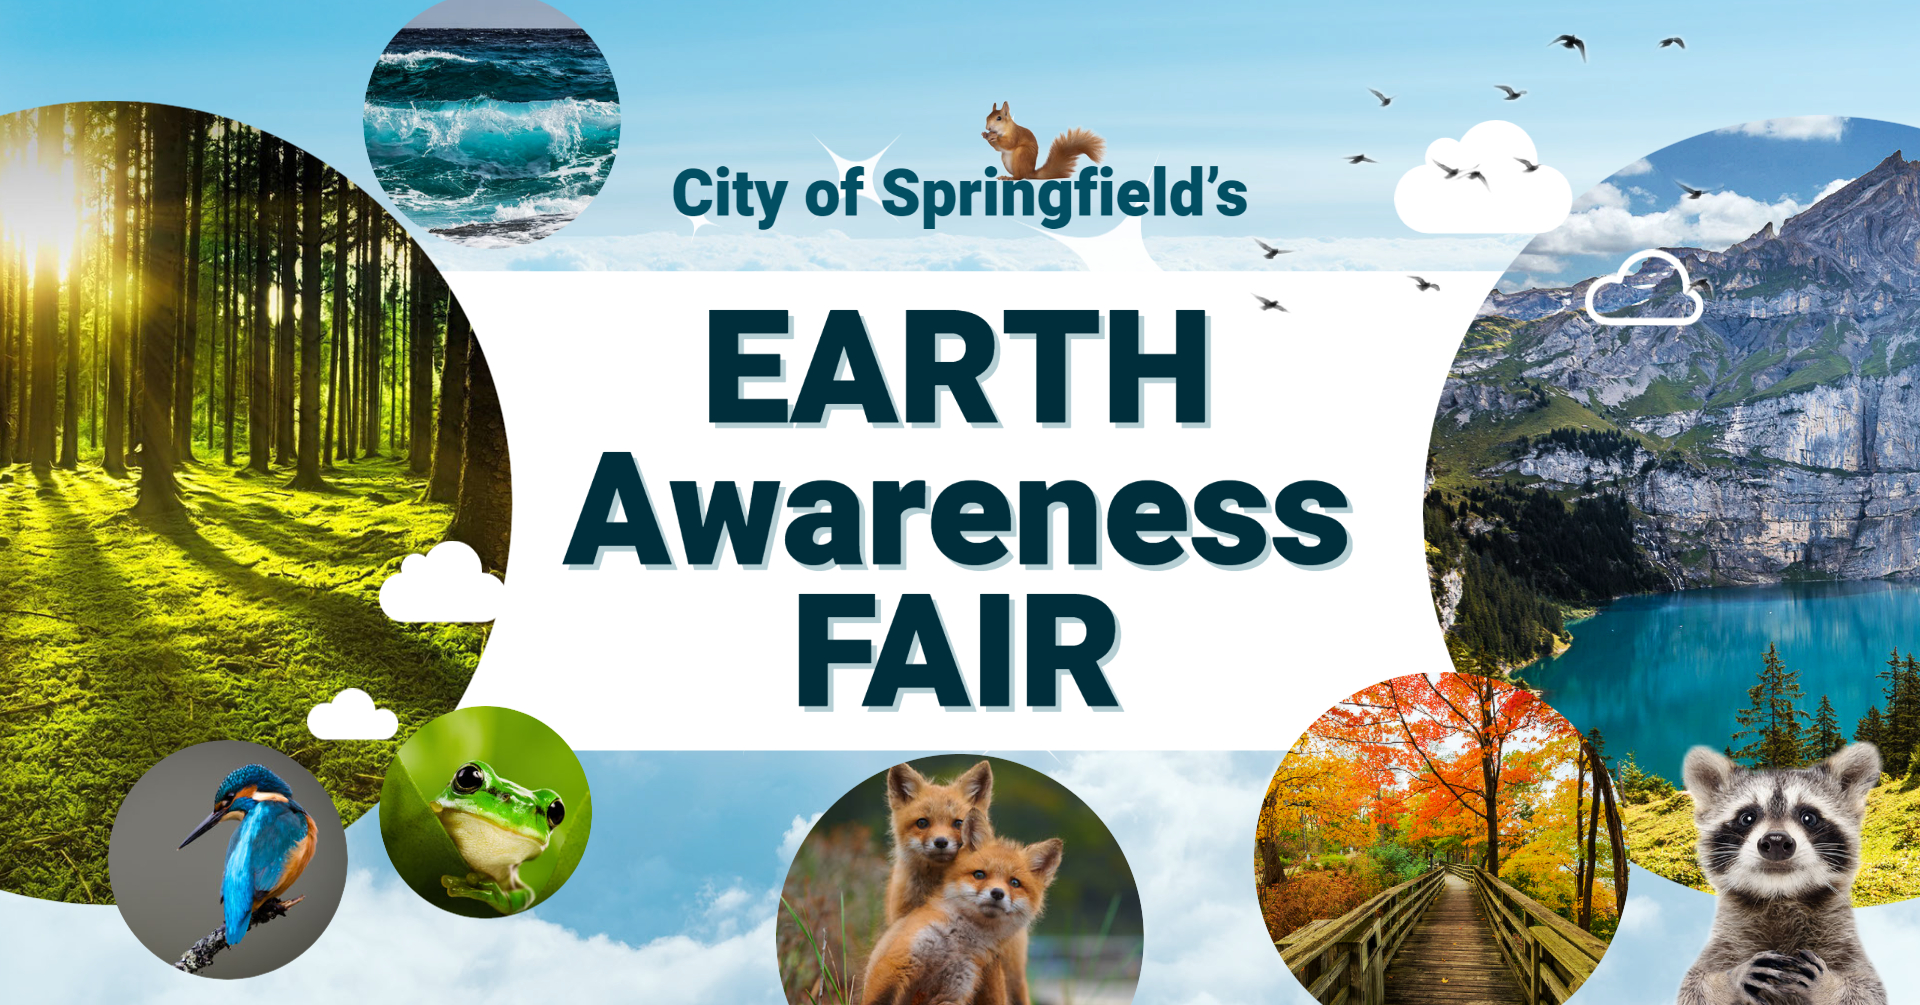 City of Springfield's Annual Earth Awareness Fair